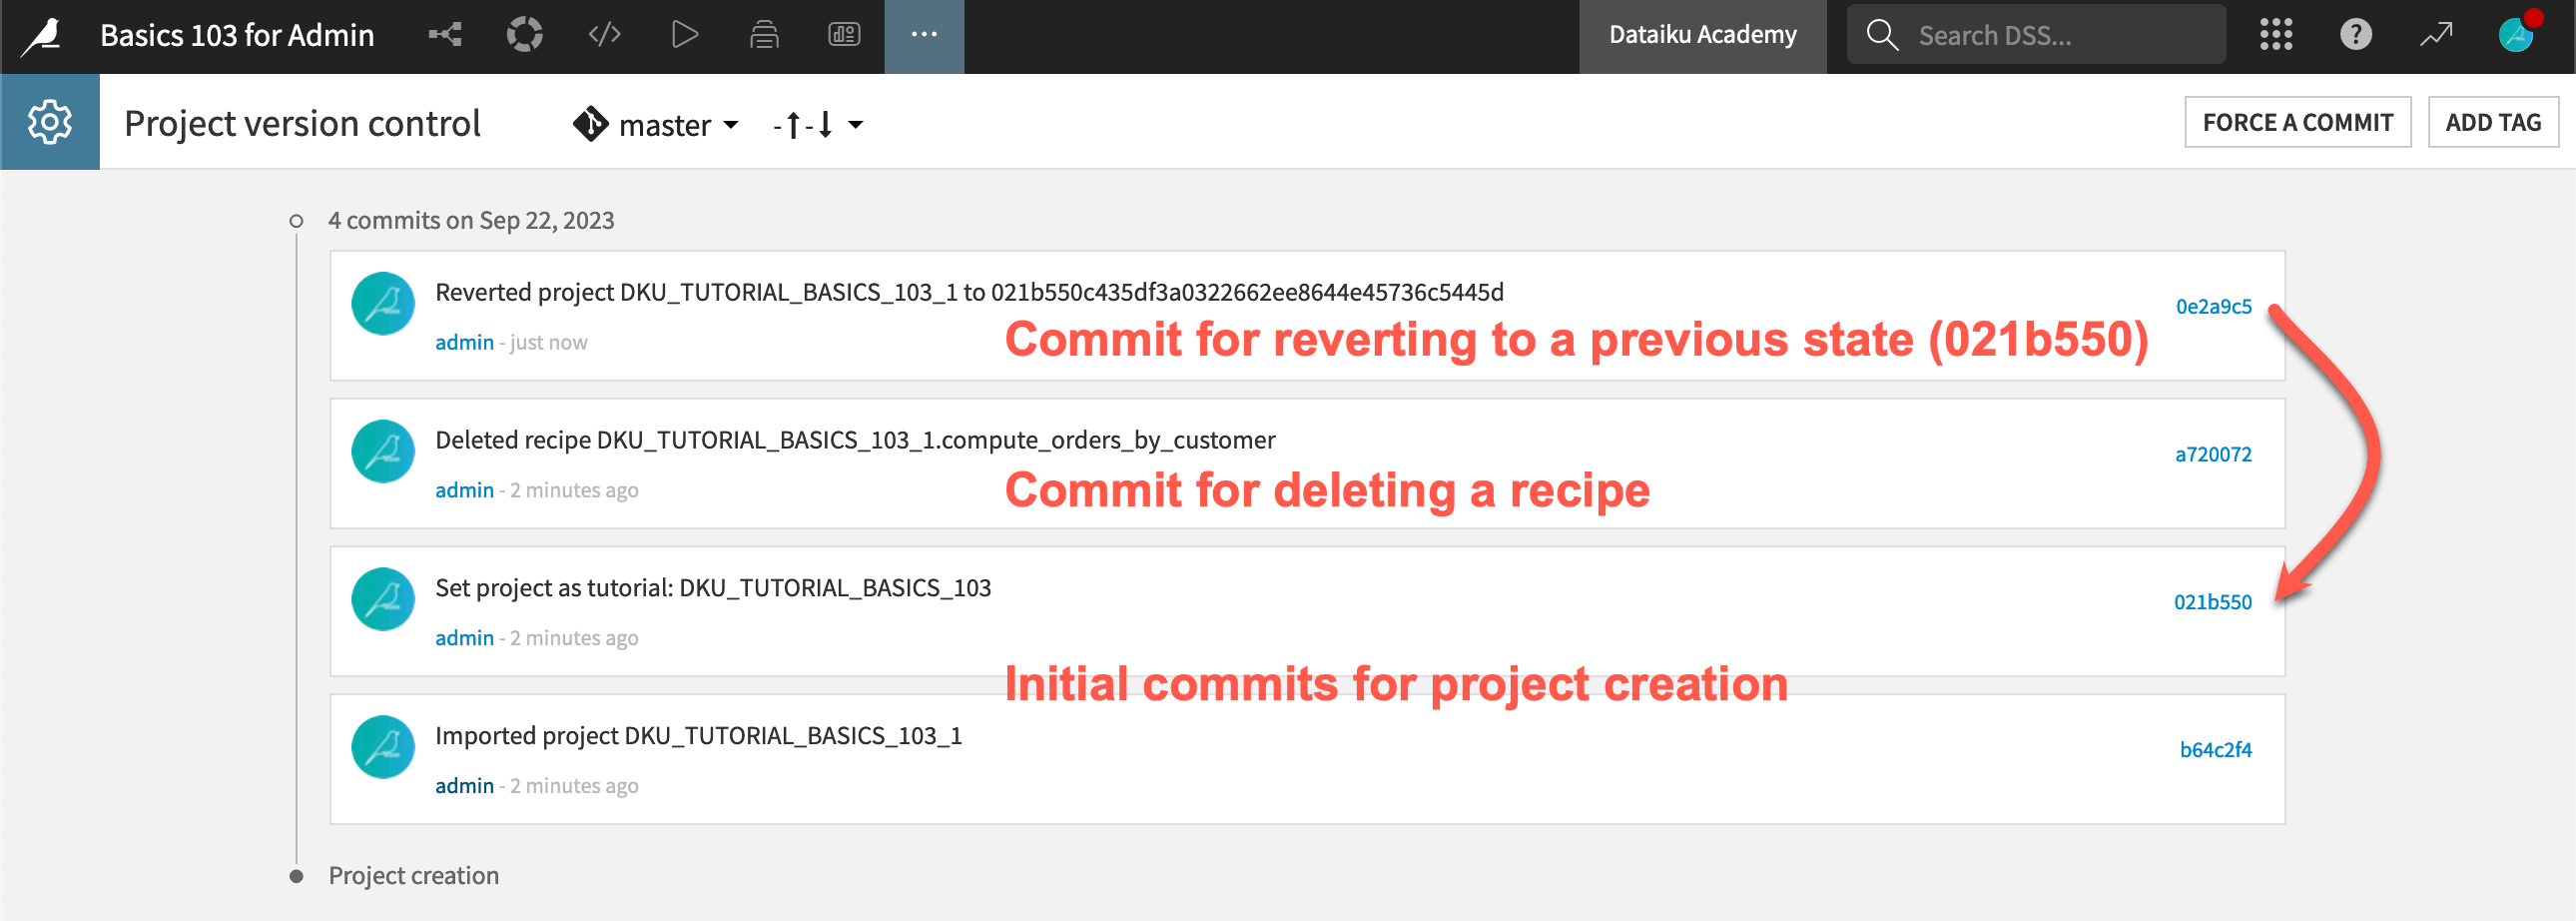 Dataiku screenshot of a project's version control git history.